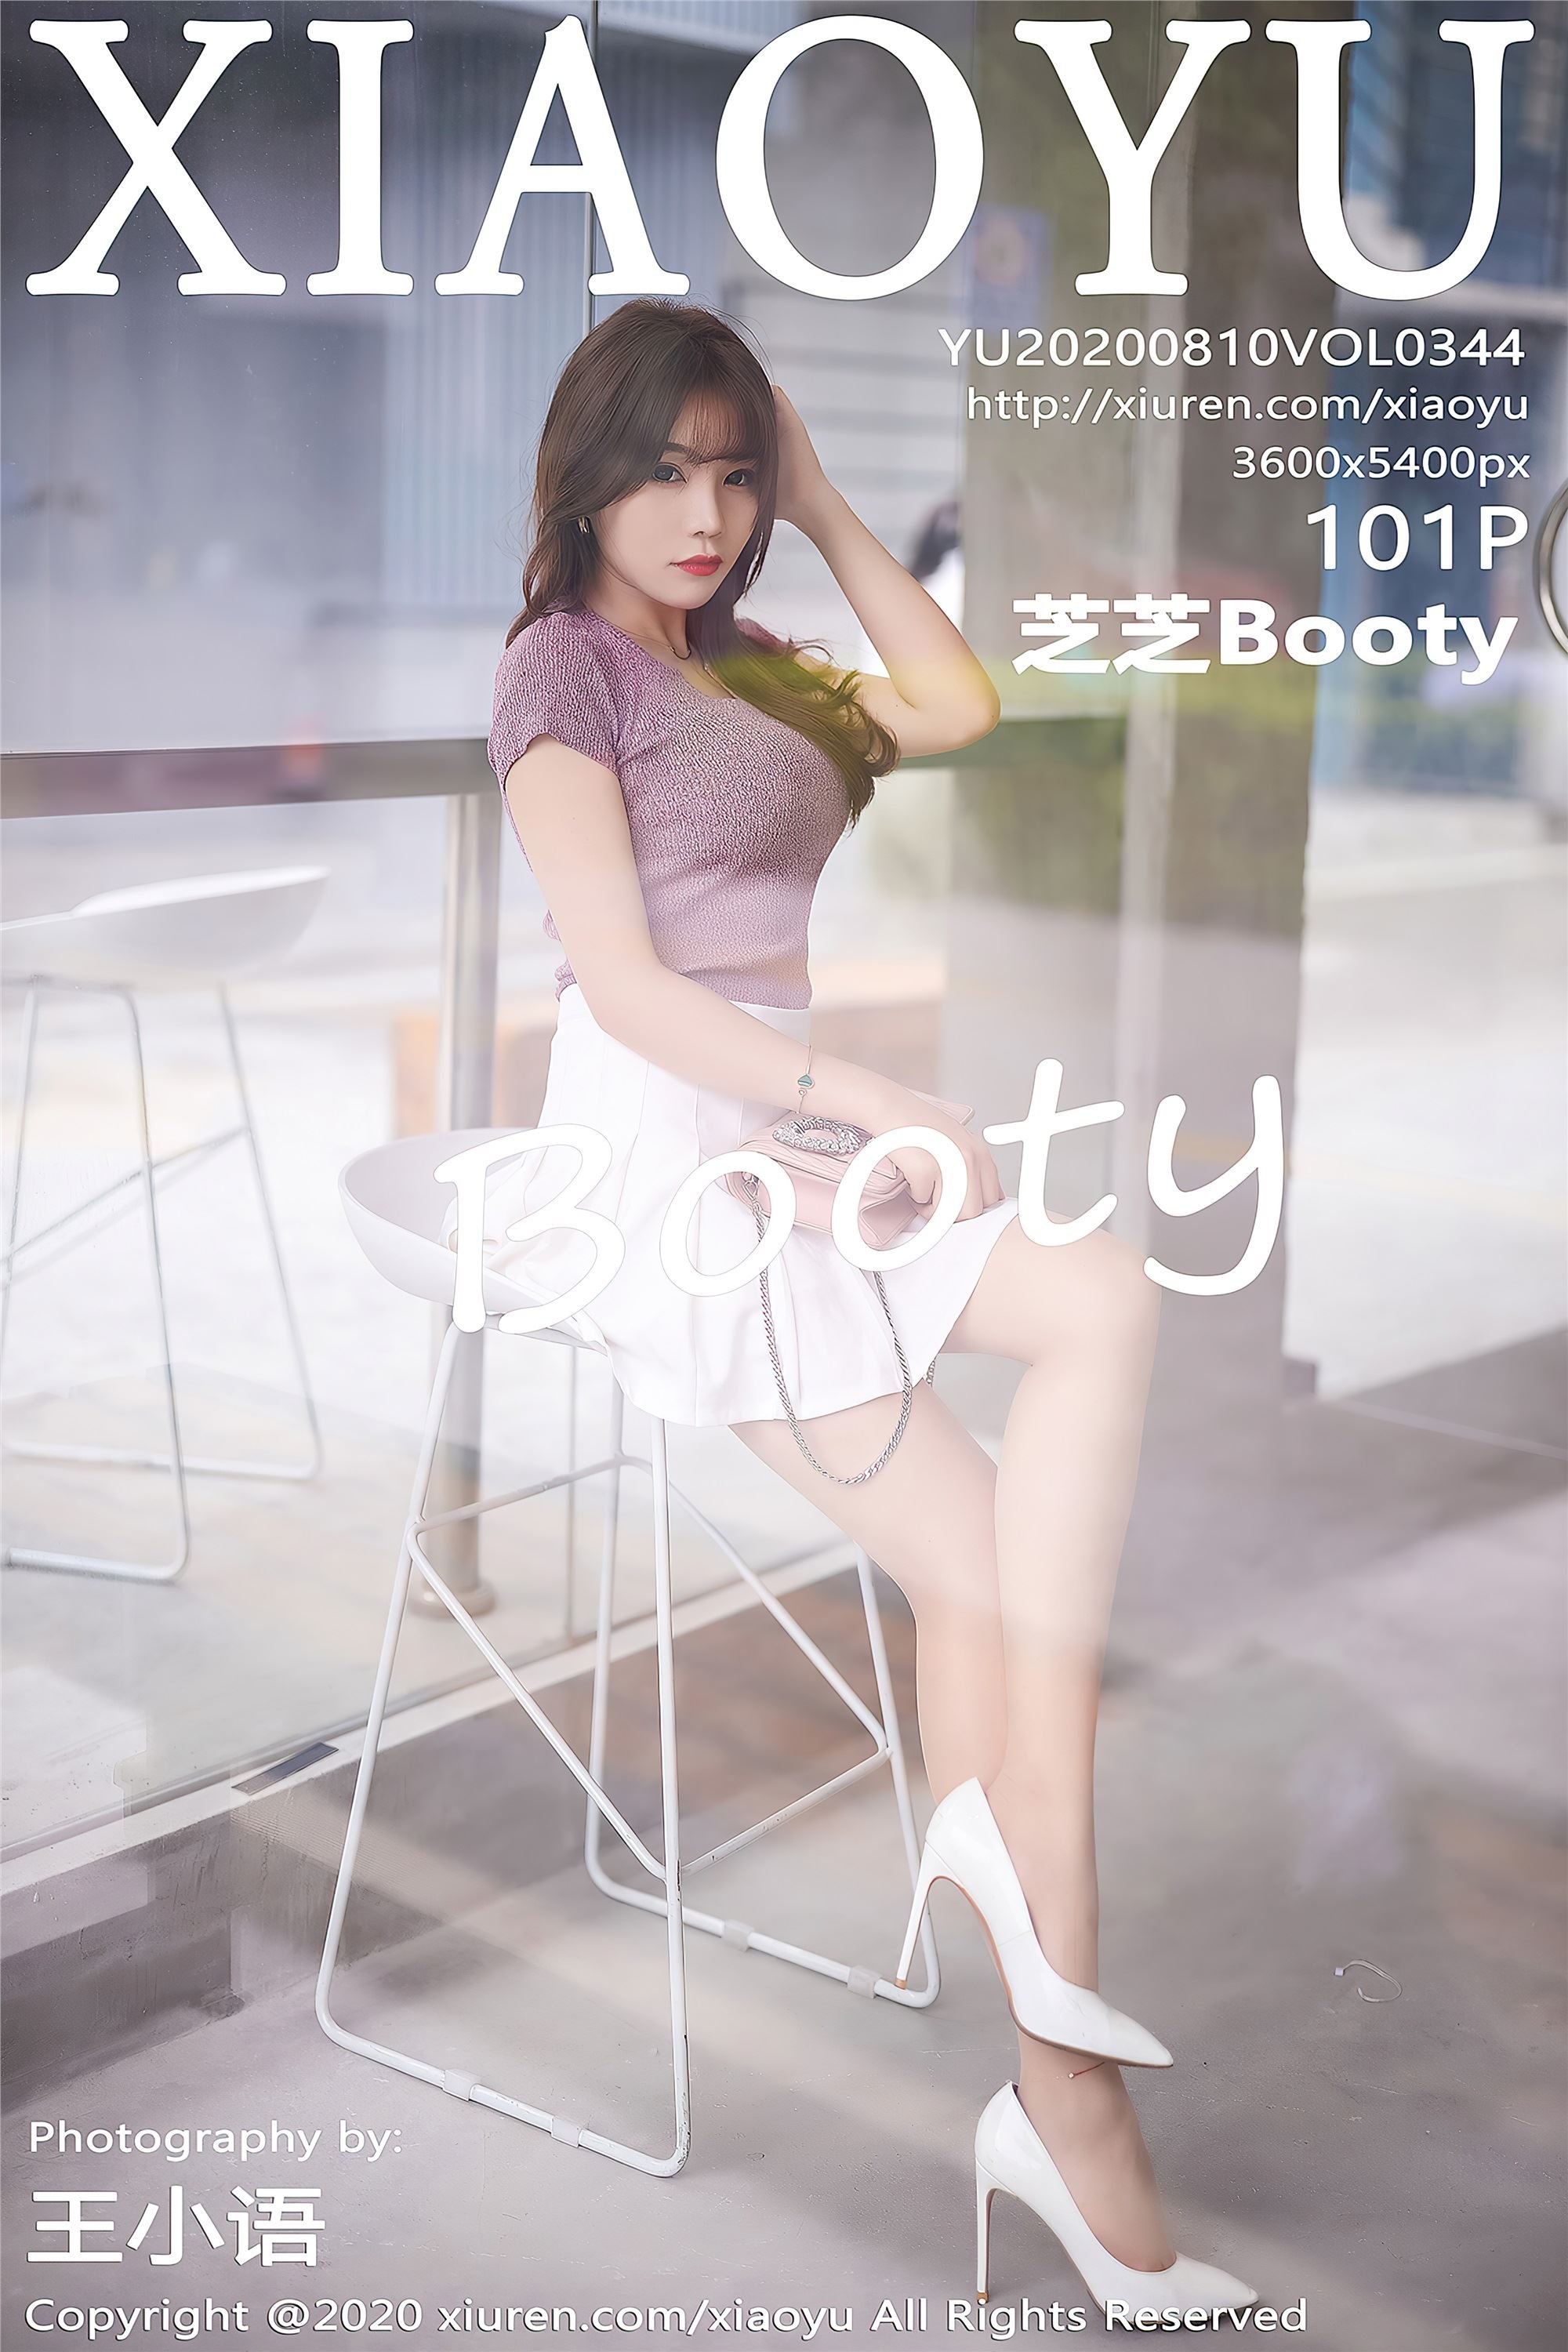 【XIAOYU畫語界系列】2020-08-10 Vol.344 芝芝Booty完整版無水印寫真【103P】 - 貼圖 - 絲襪美腿 -